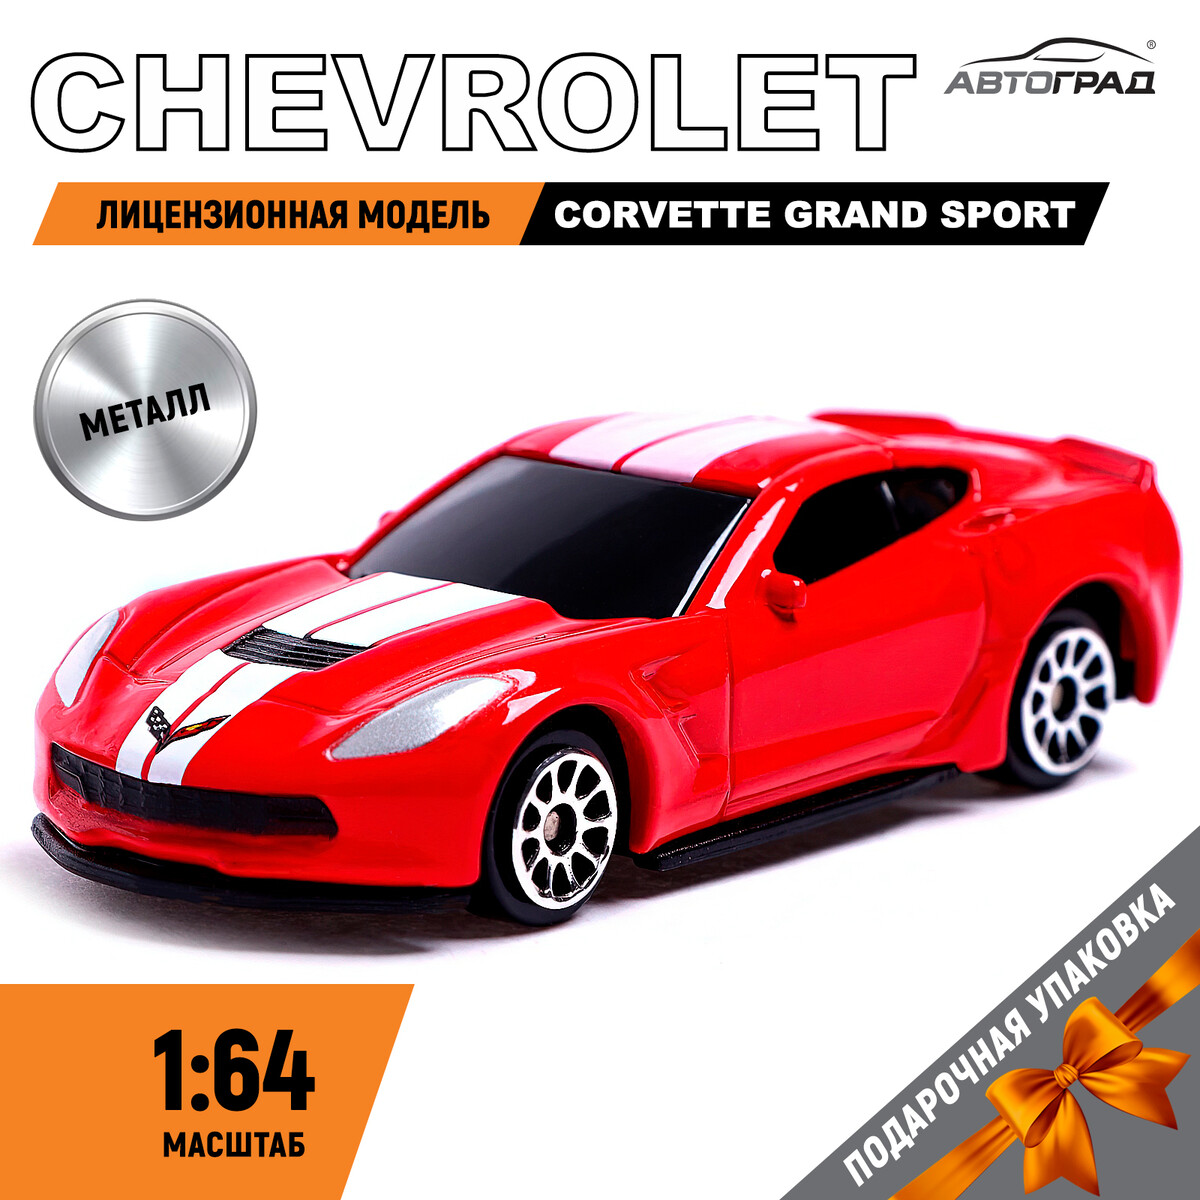 Машина металлическая chevrolet corvette grand sport, 1:64, цвет красный машина металлическая chevrolet corvette grand sport 1 64 красный